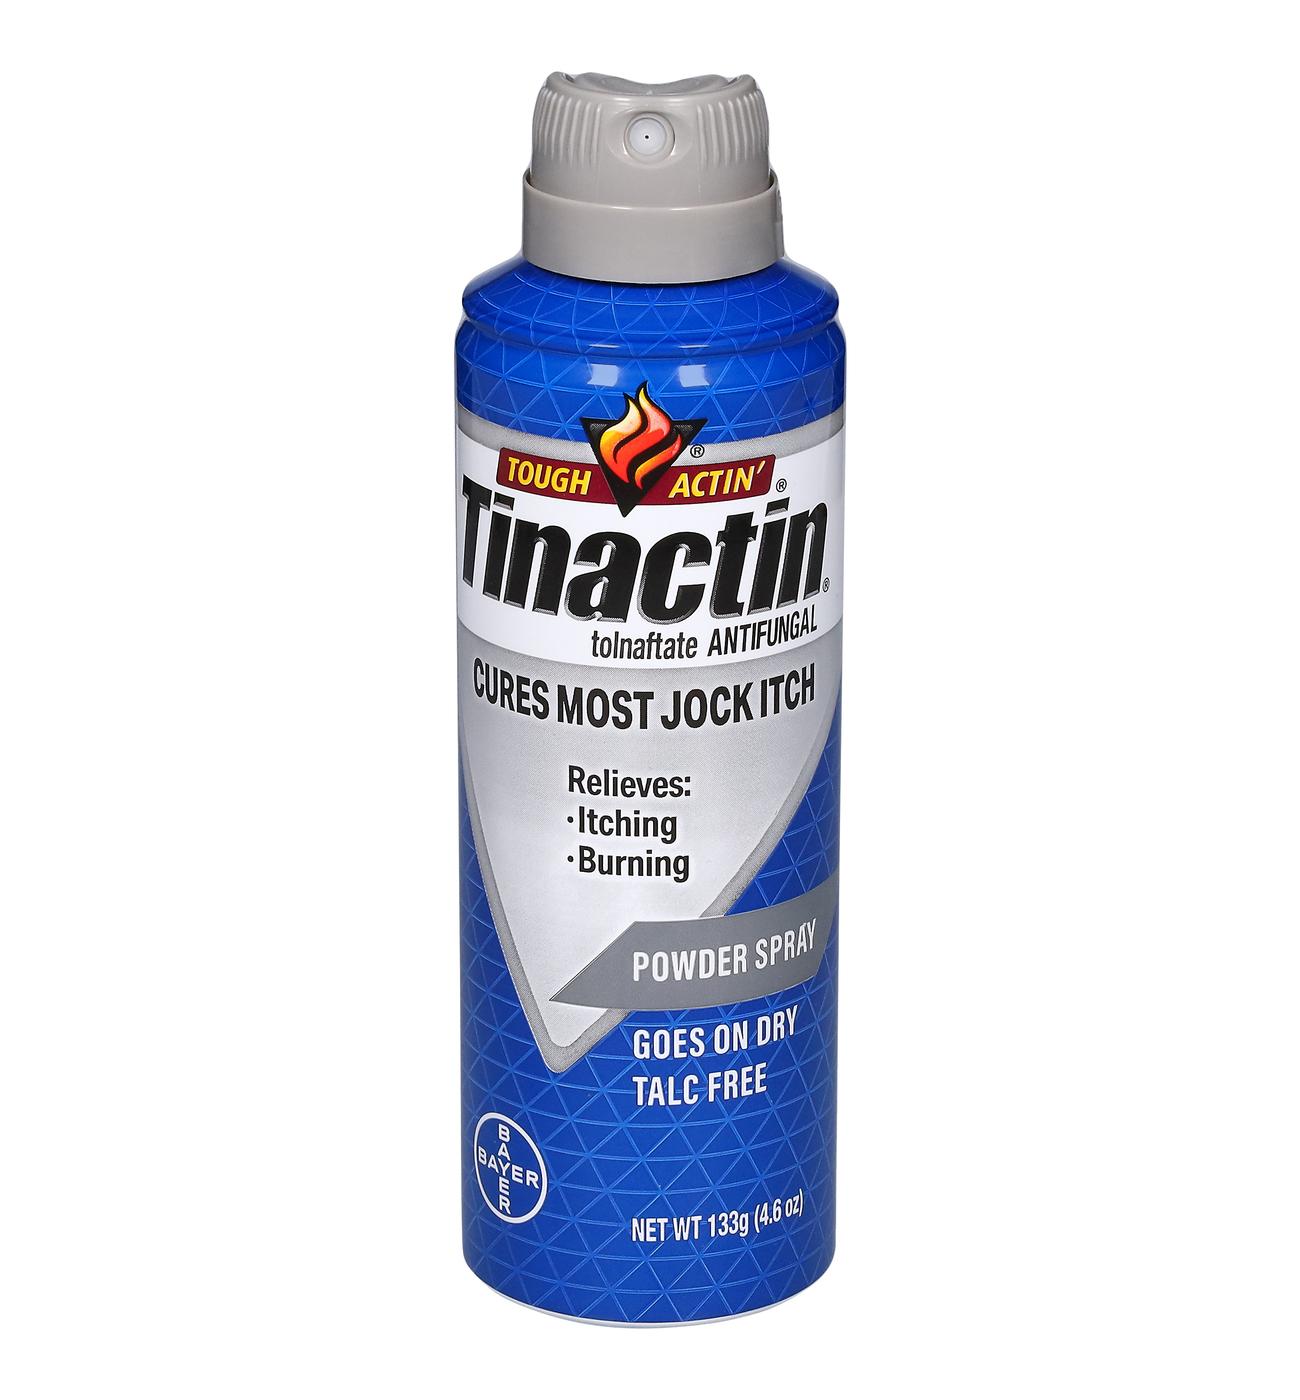 Tinactin Antifungal Jock Itch Powder Spray; image 1 of 2